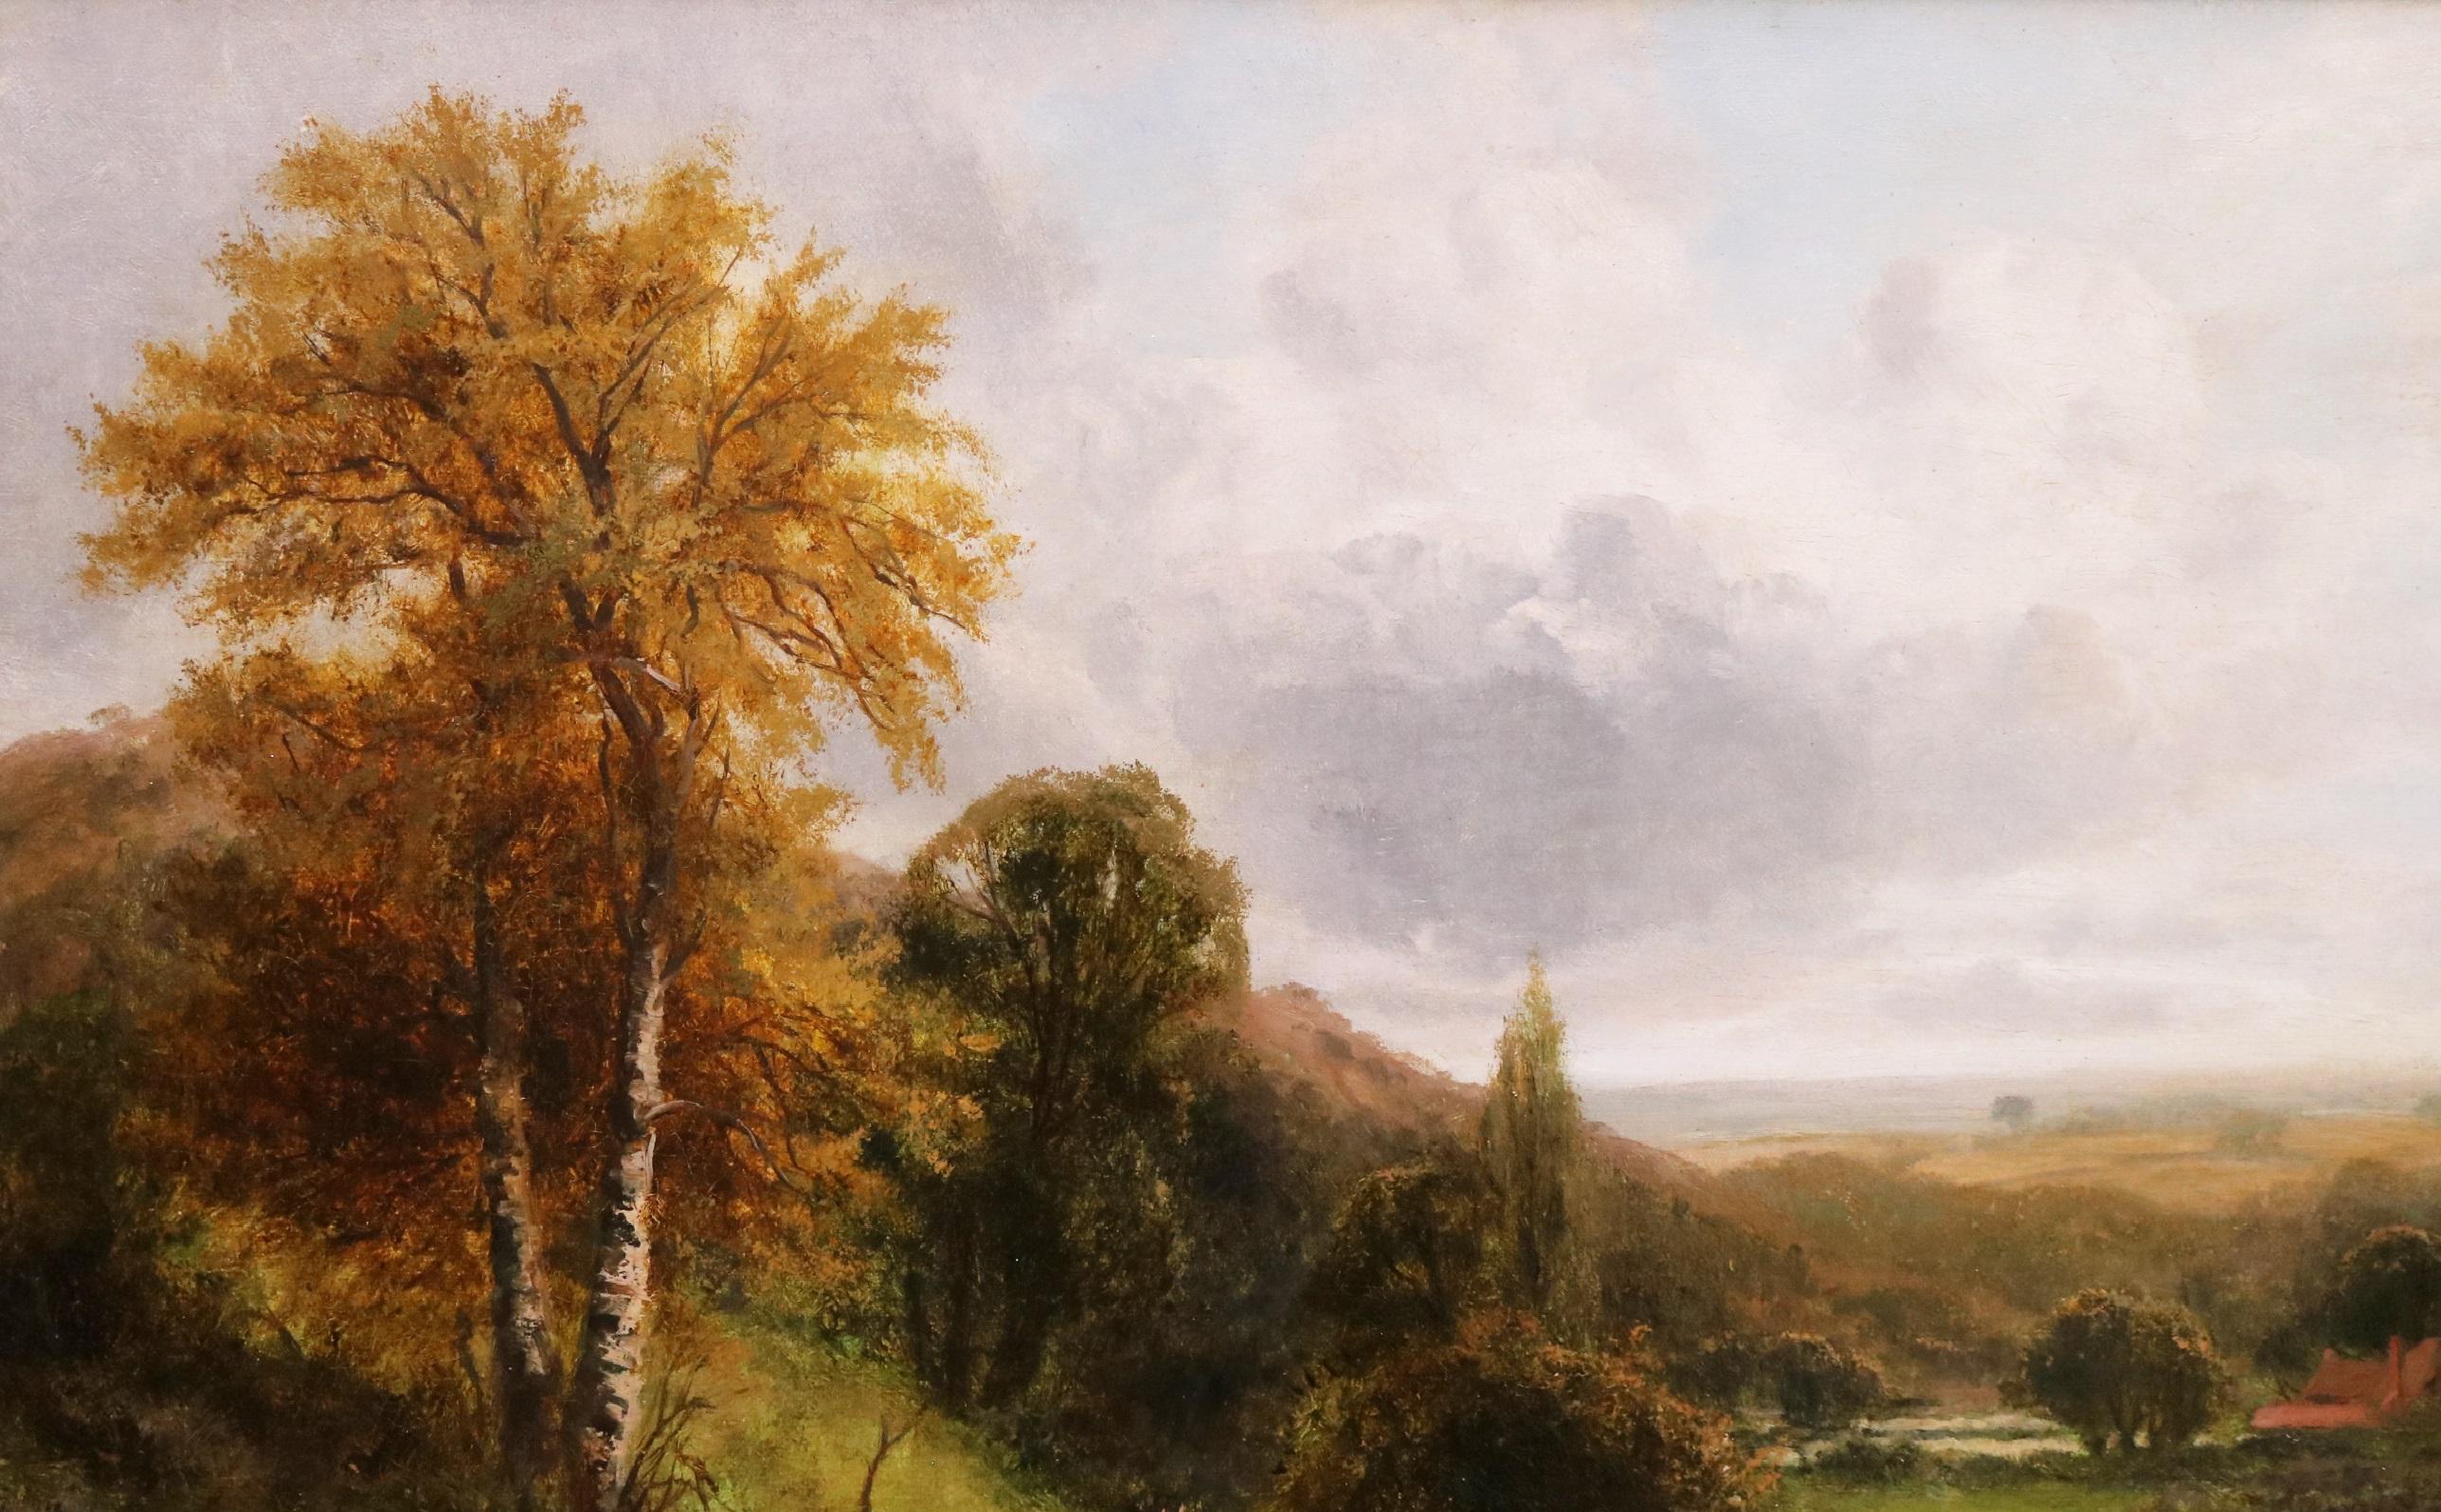 Faggot Gatherers, Surrey - 19th Century English Landscape Oil Painting 3